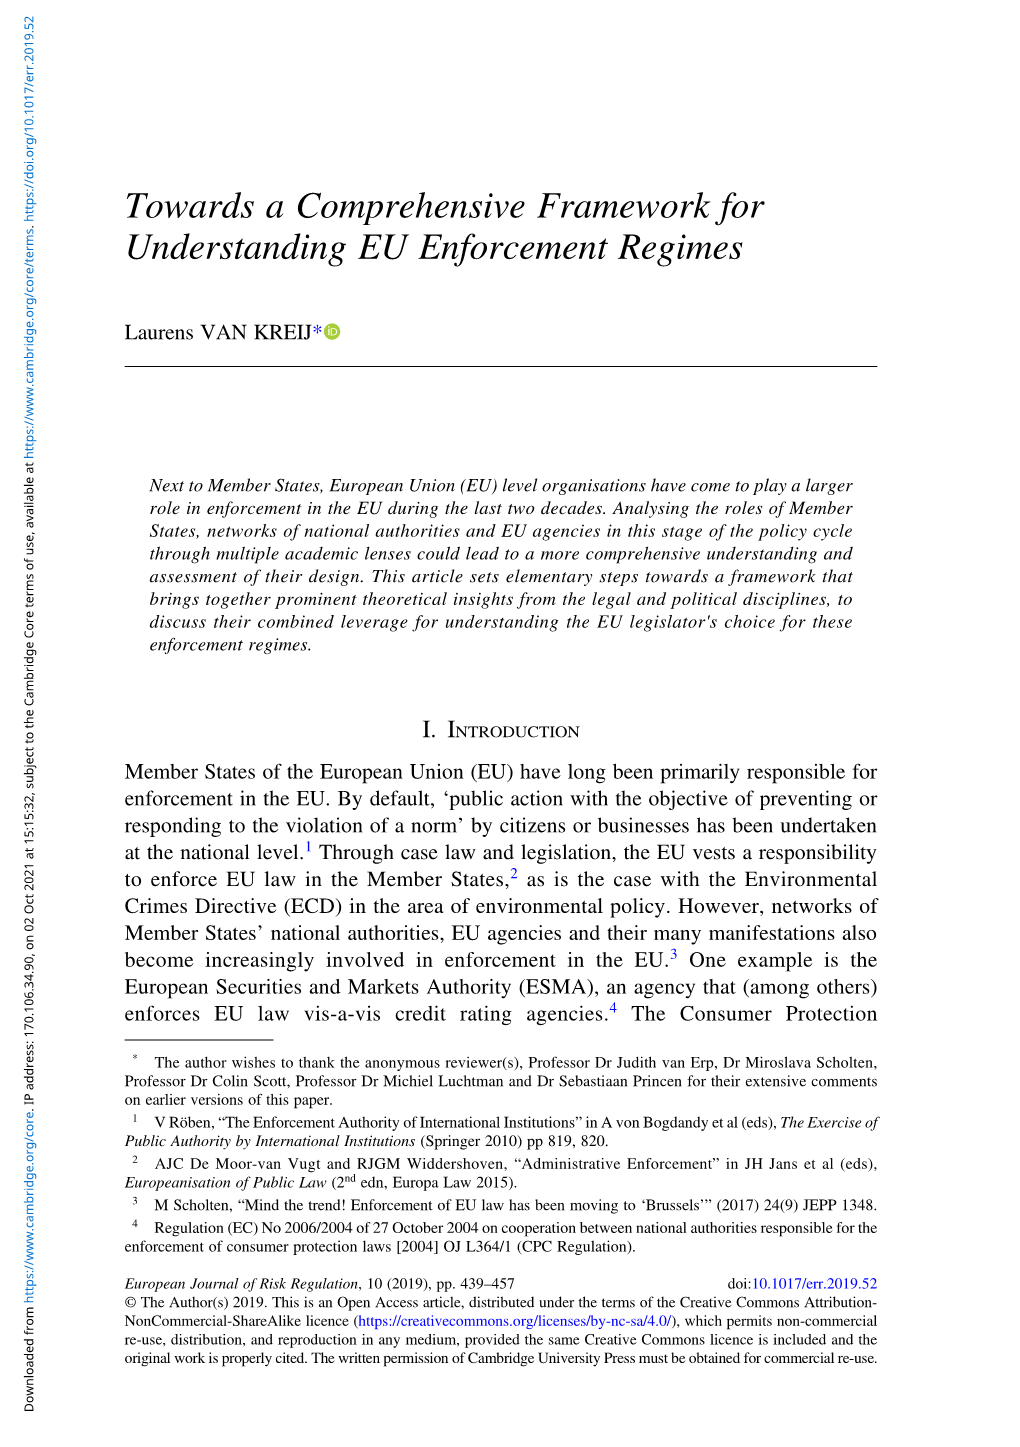 Towards a Comprehensive Framework for Understanding EU Enforcement Regimes